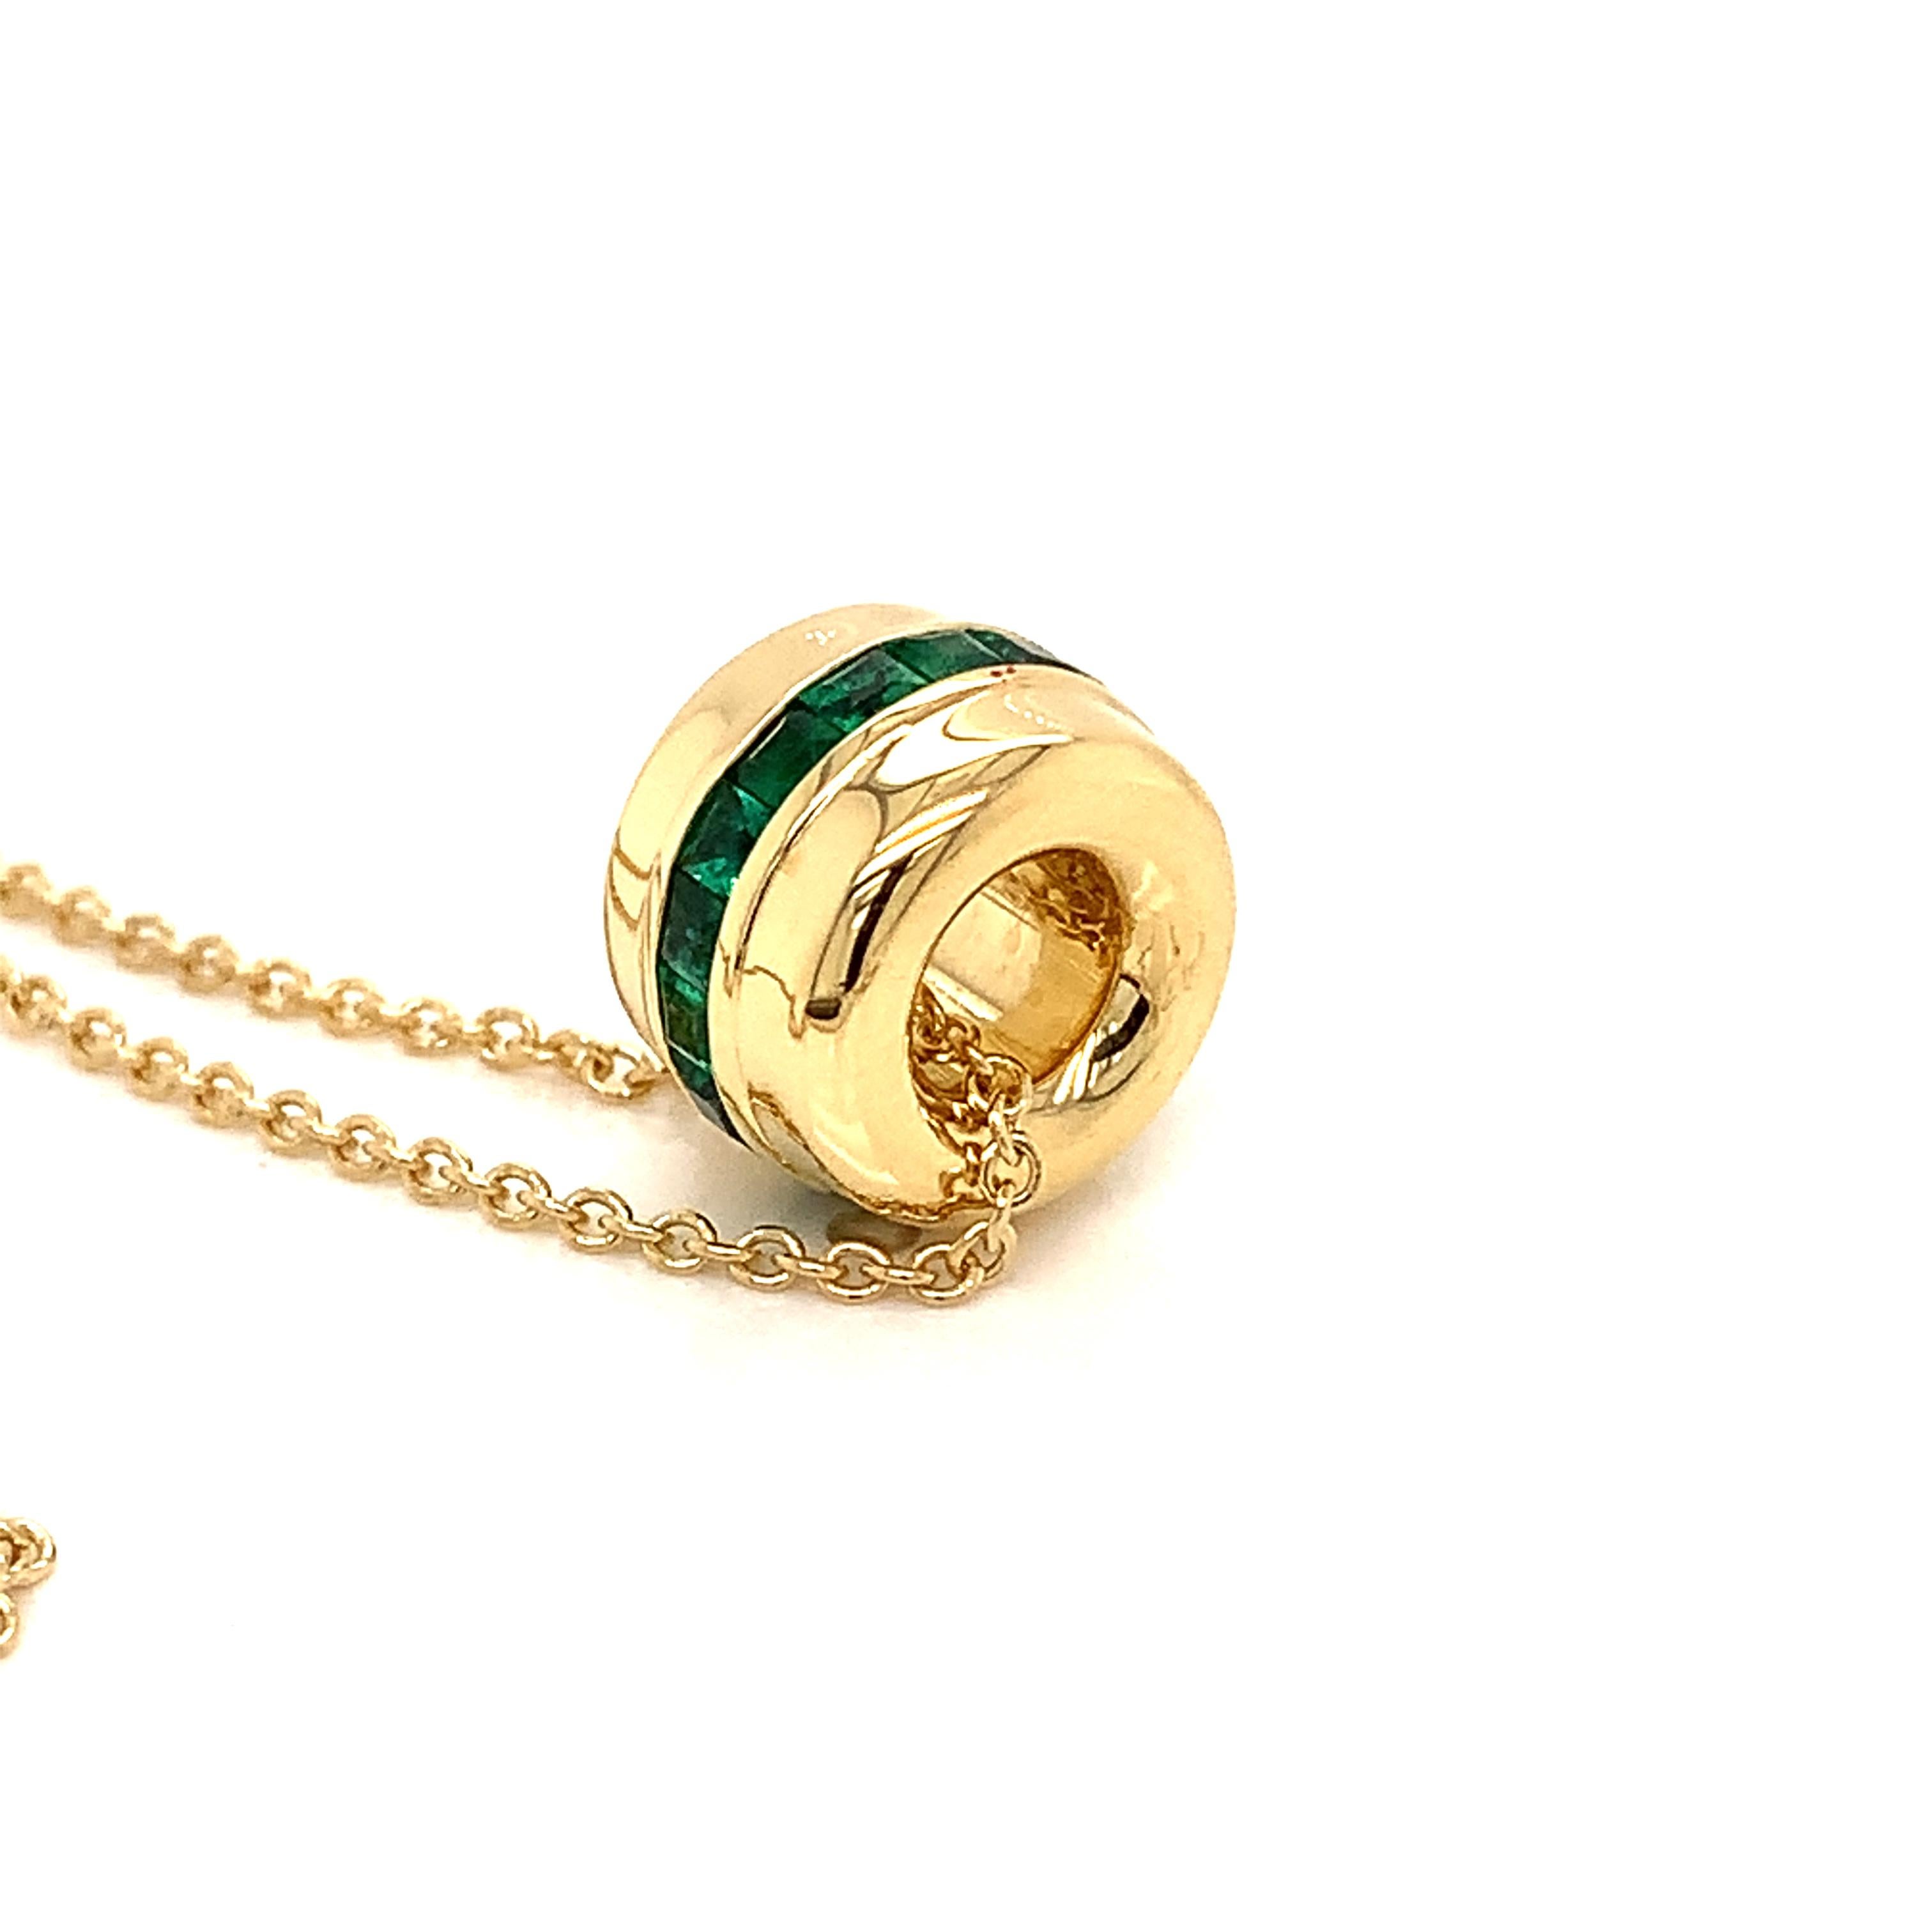 Square Cut 18 Karat Yellow Gold Carre Emeralds Garavelli Pendant with Chain